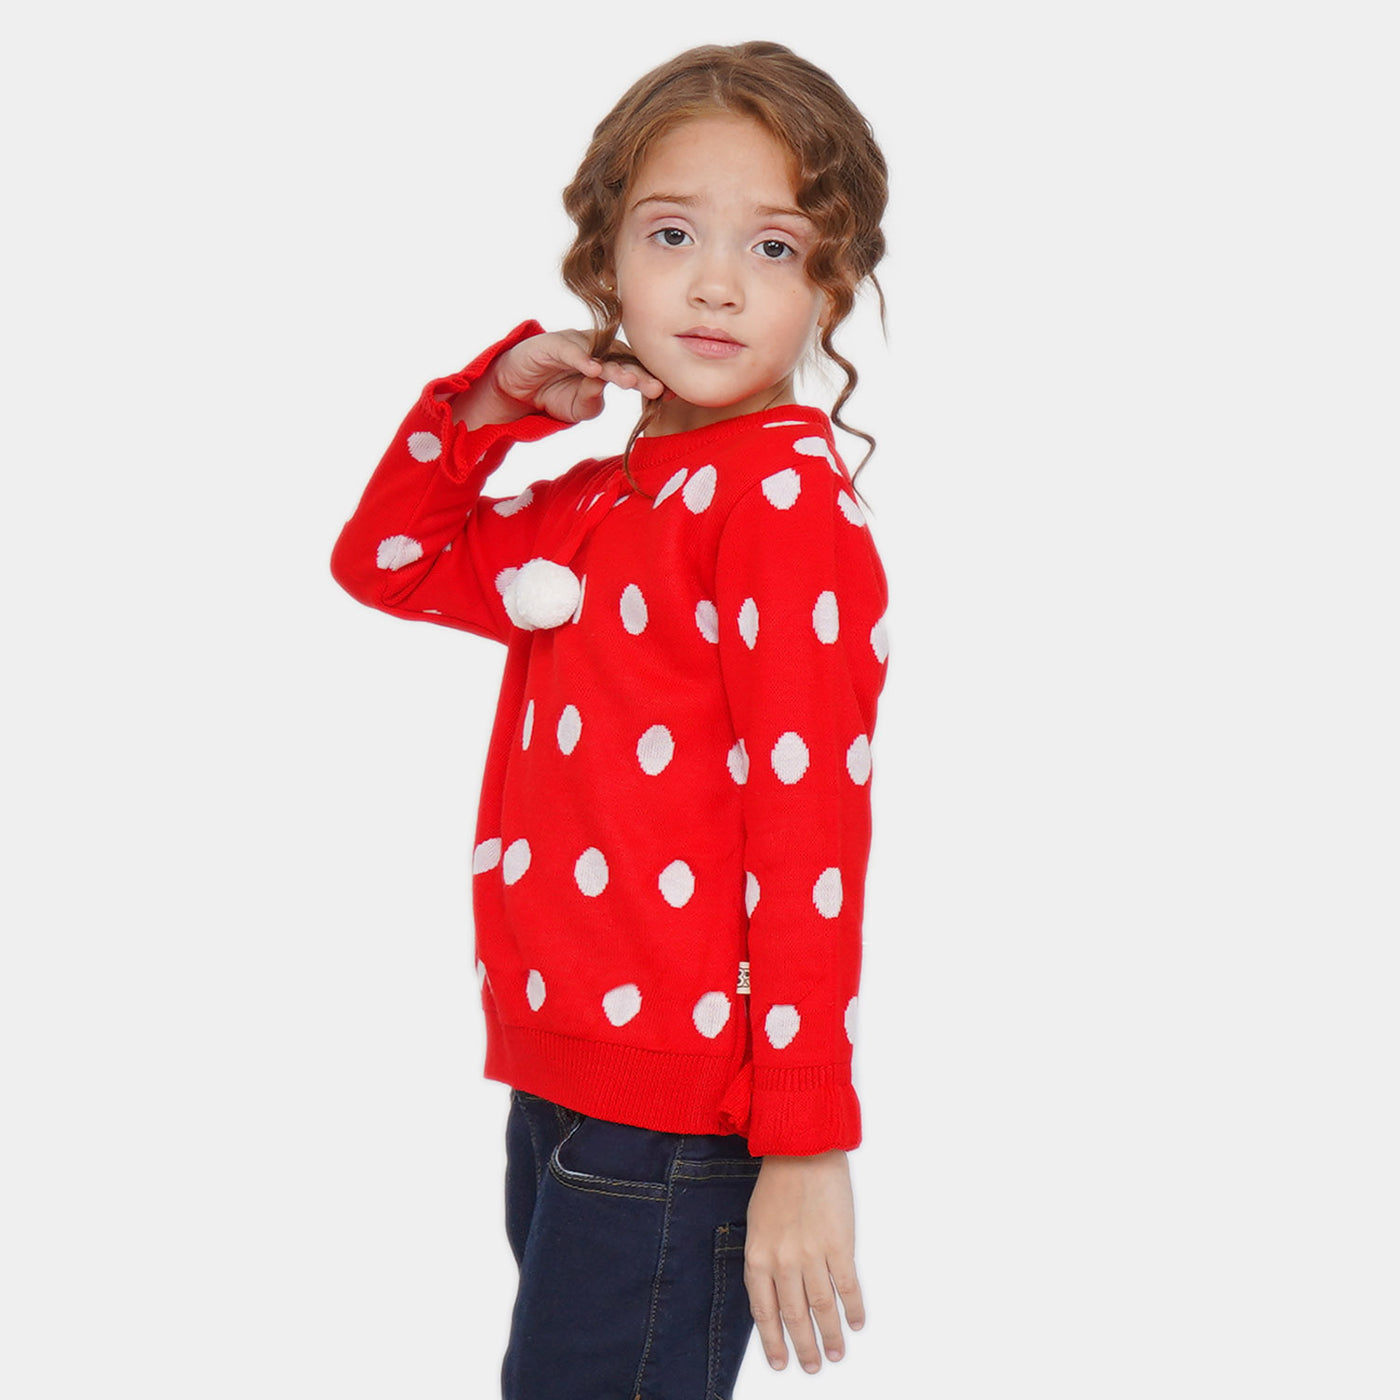 Girls Sweater BP31-22 - Red